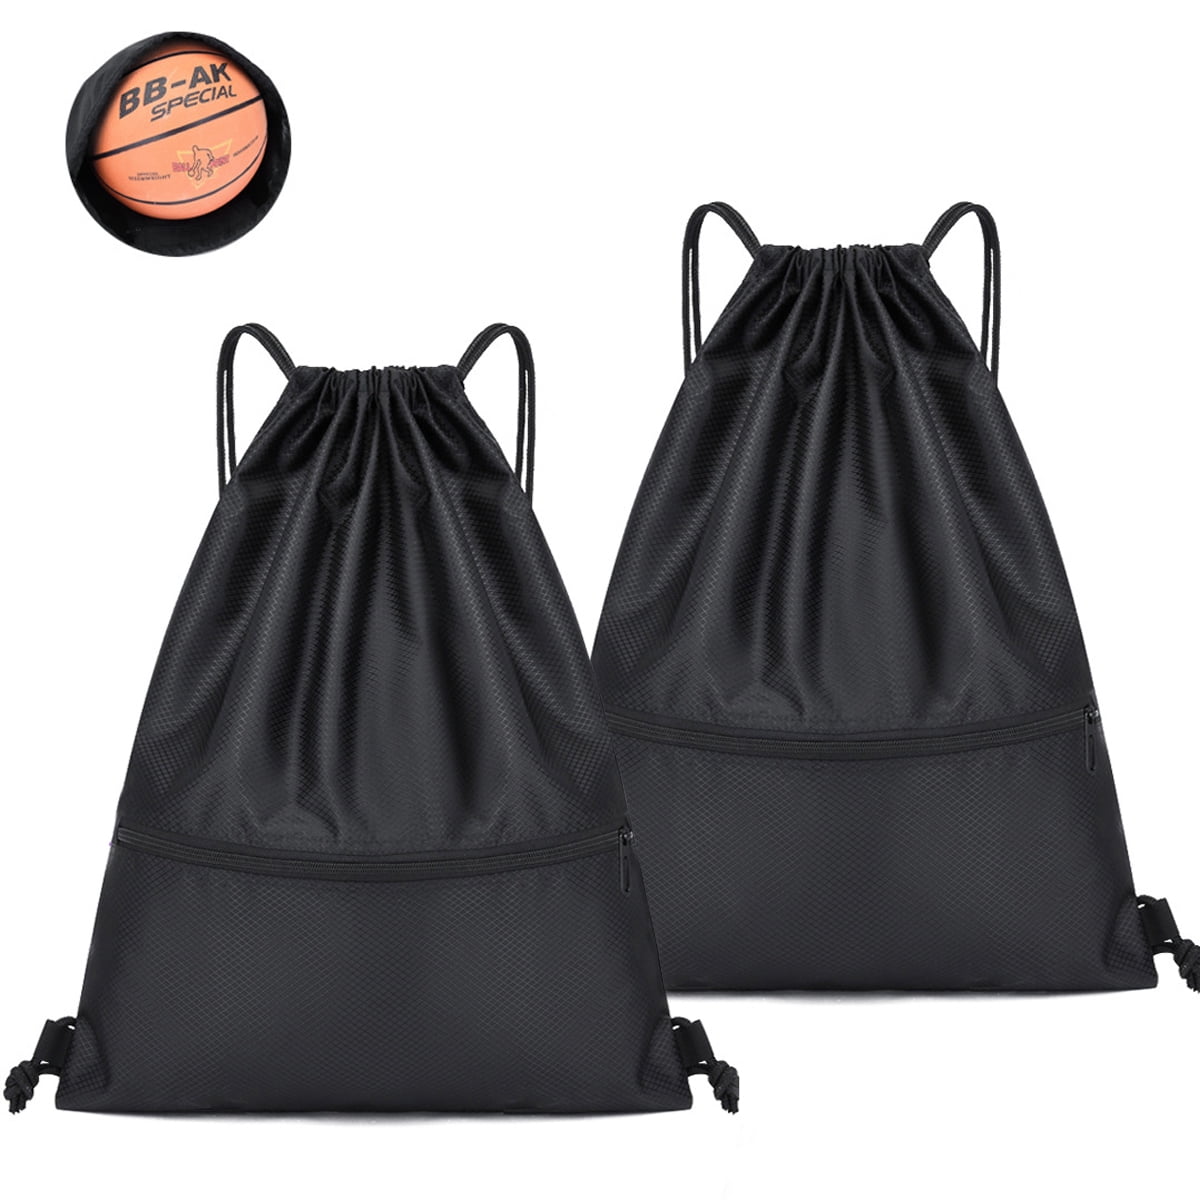 Drawstring Backpack Bag, Waterproof Gym Sackpack Swim Bag for Men Women ...